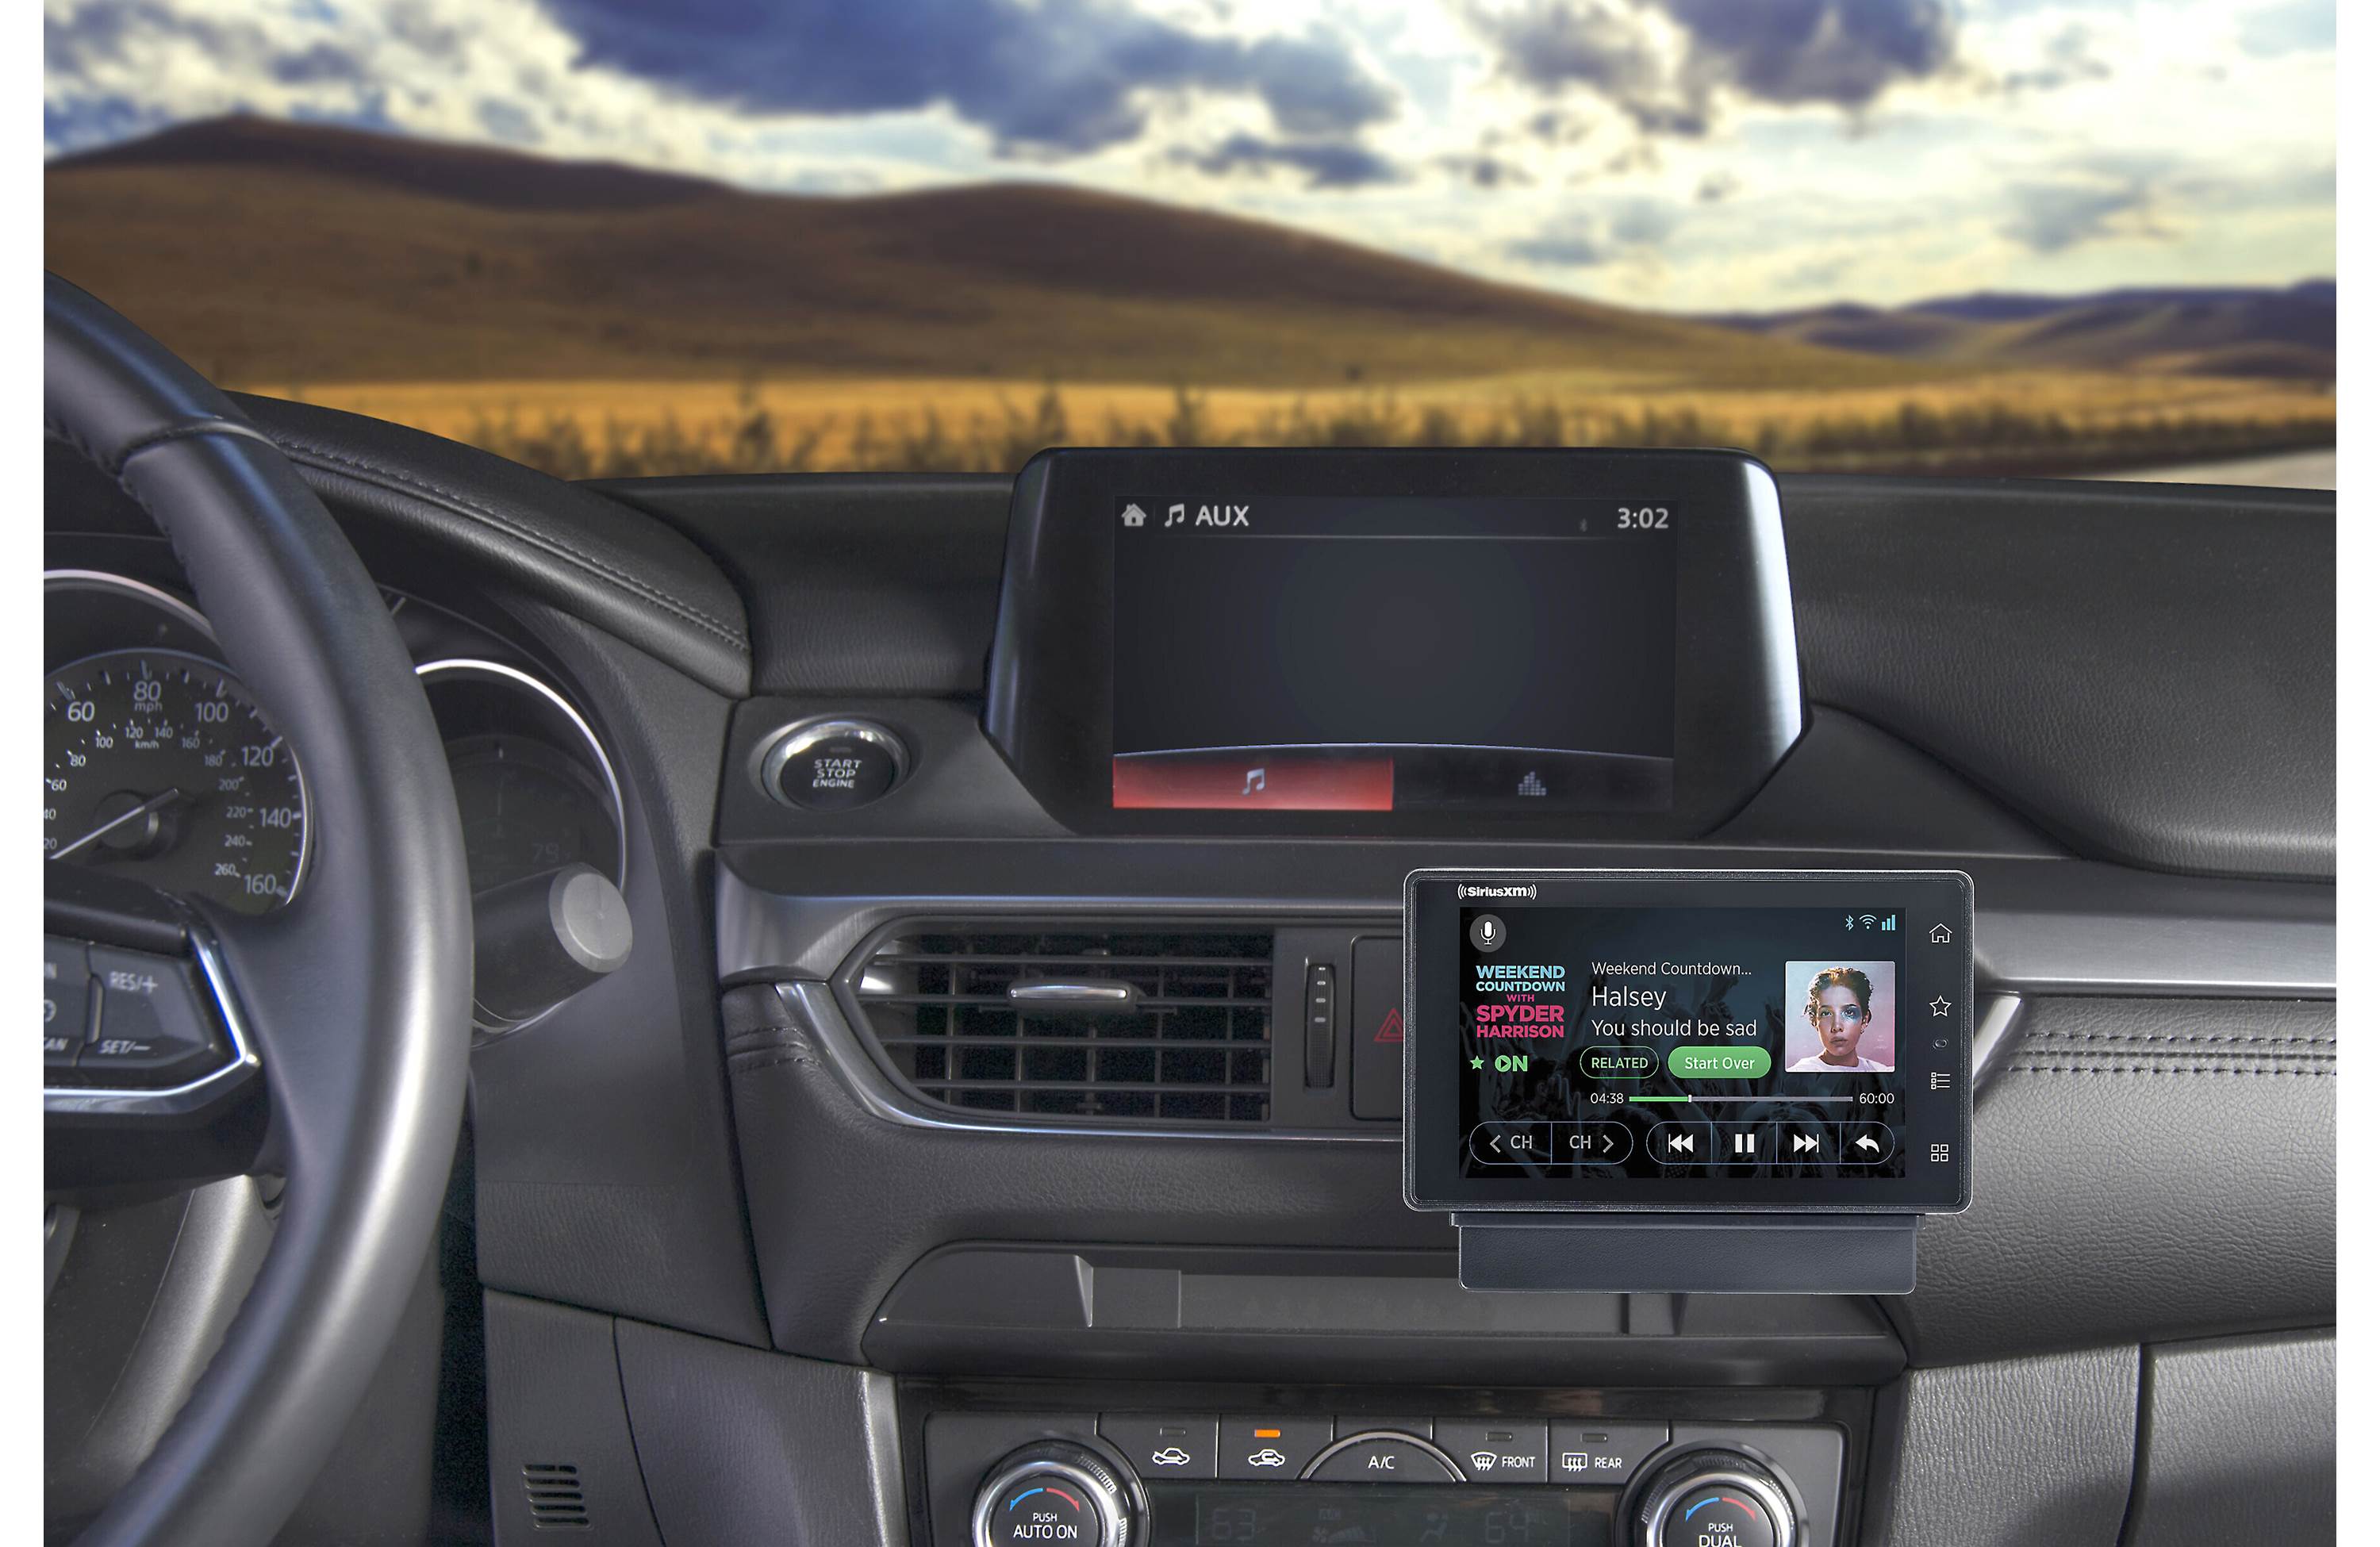 Two Ways to Add SiriusXM Satellite Radio to Your Car